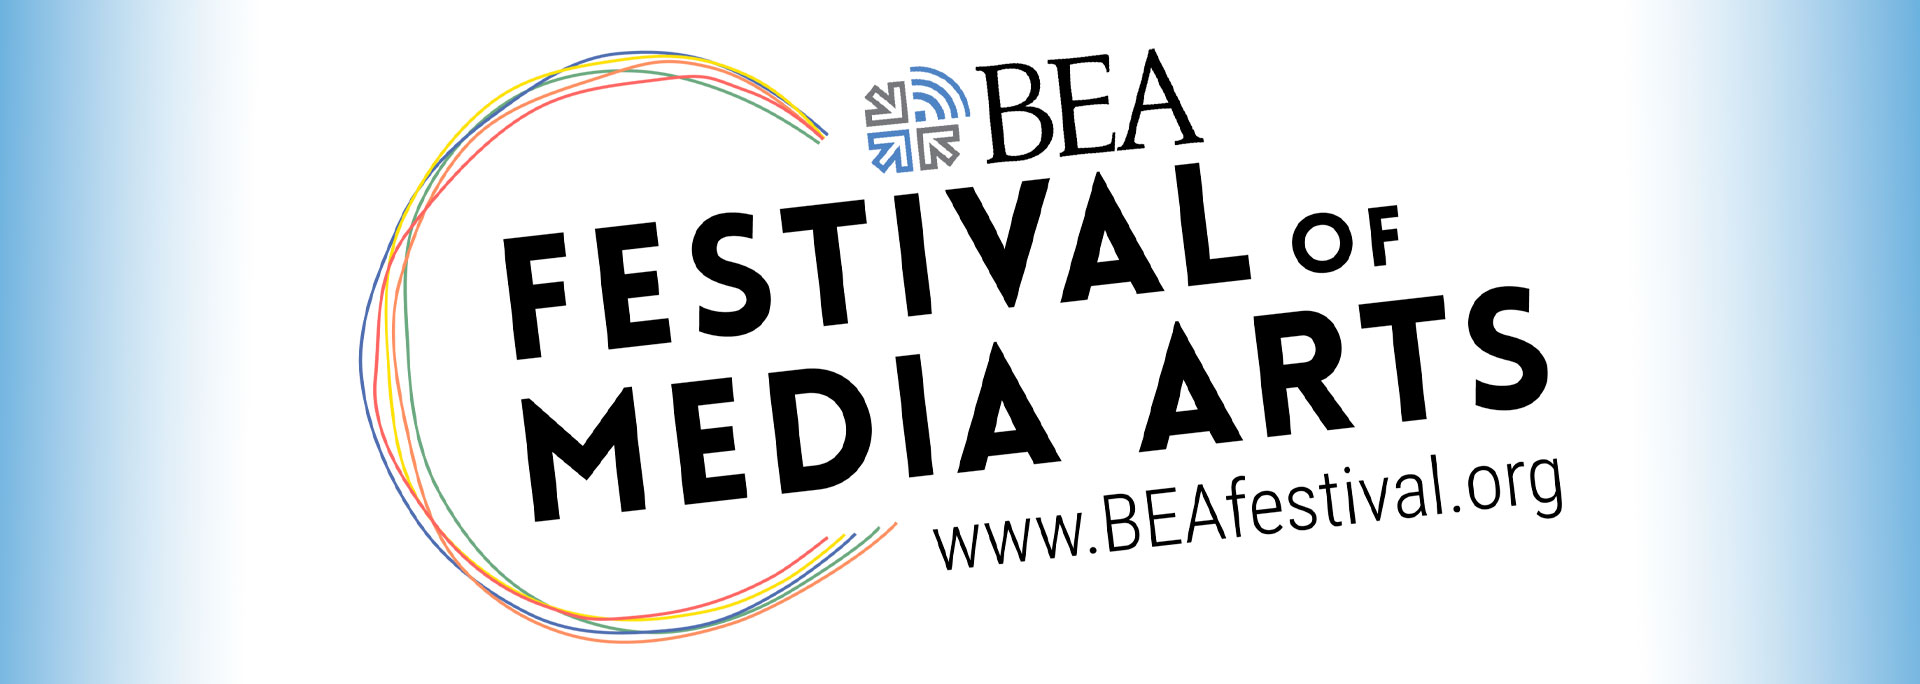 BEA Festival